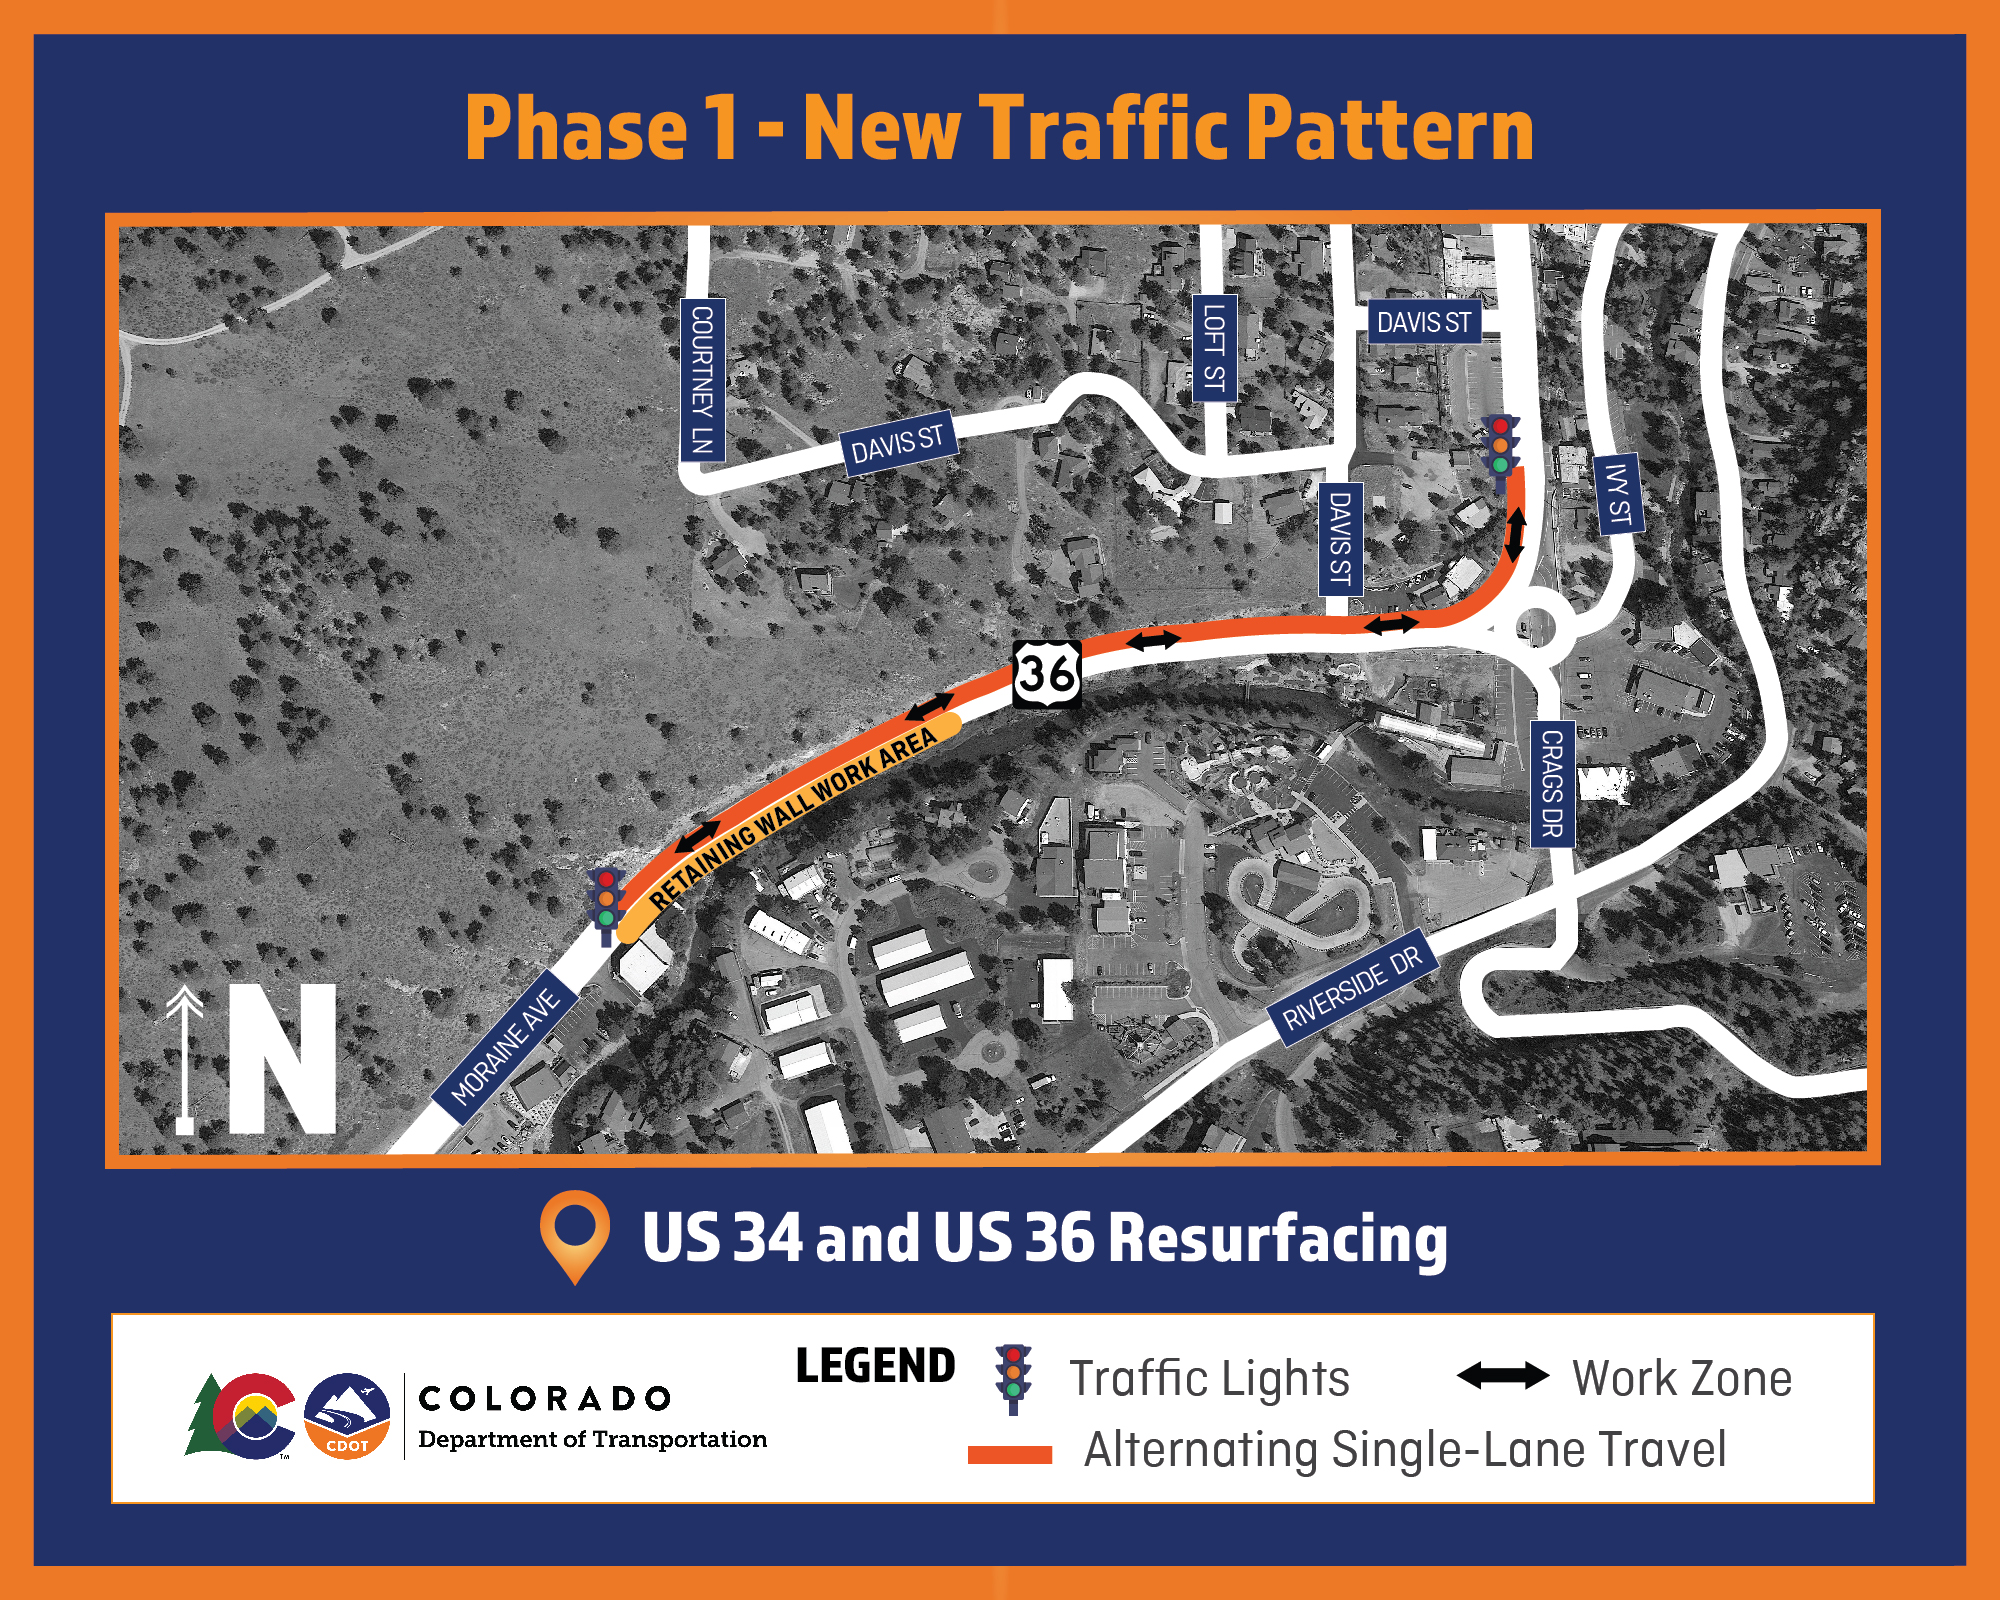 1016-US 34 and US 36 Resurfacing map_Phase 1 New Traffic Pattern.jpg detail image